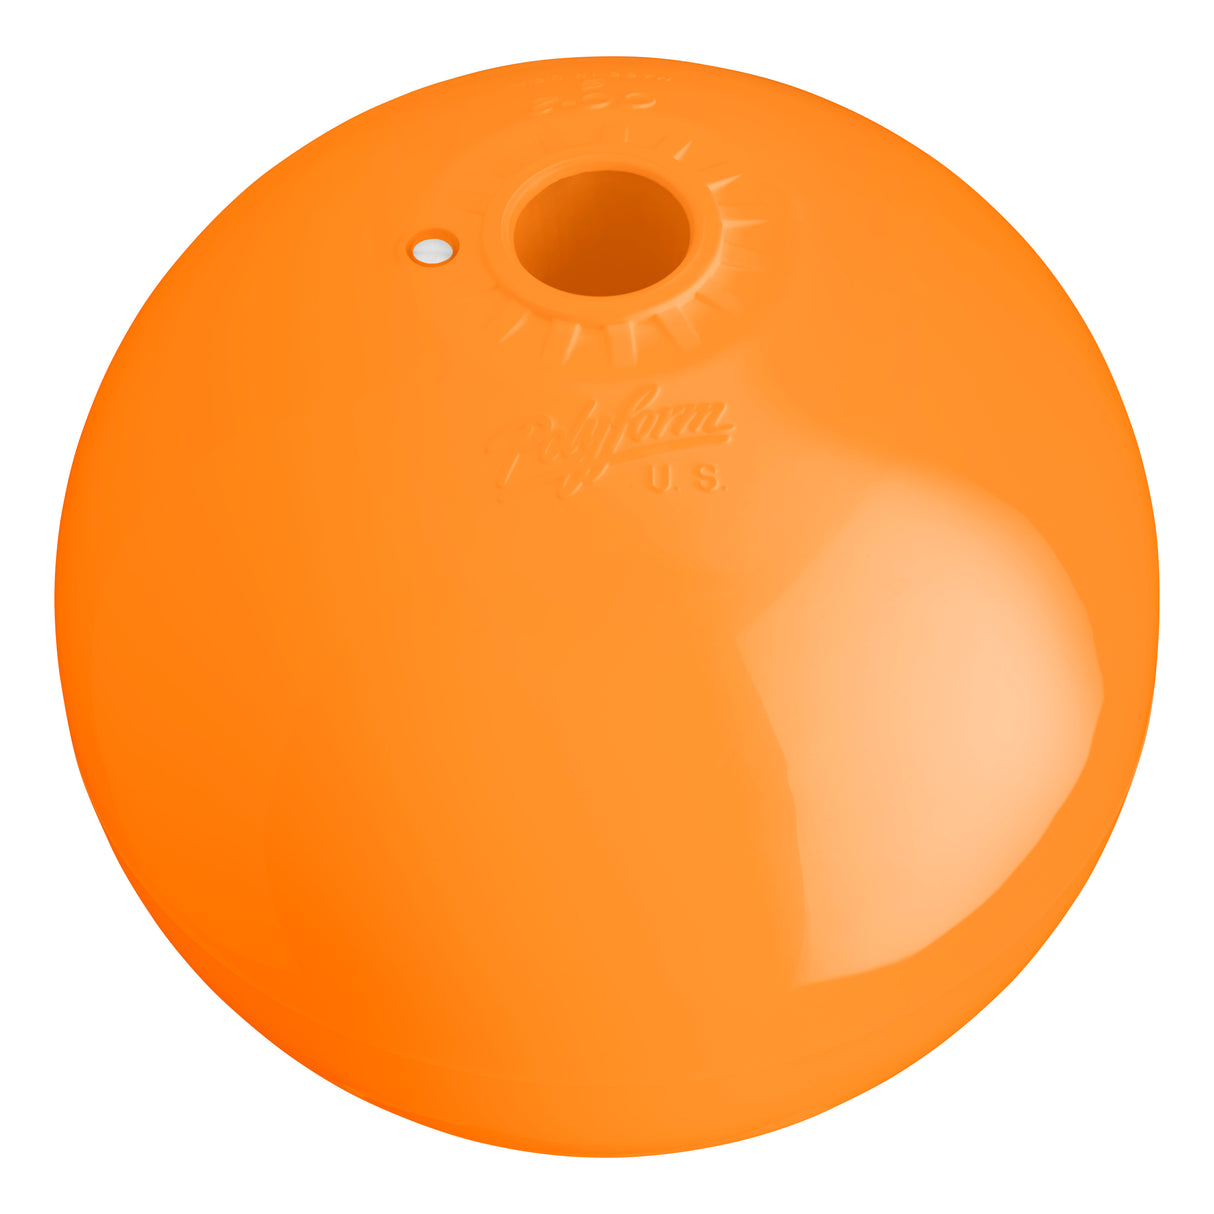 Hole through center mooring and marker buoy, Polyform CC-5 Orange angled shot